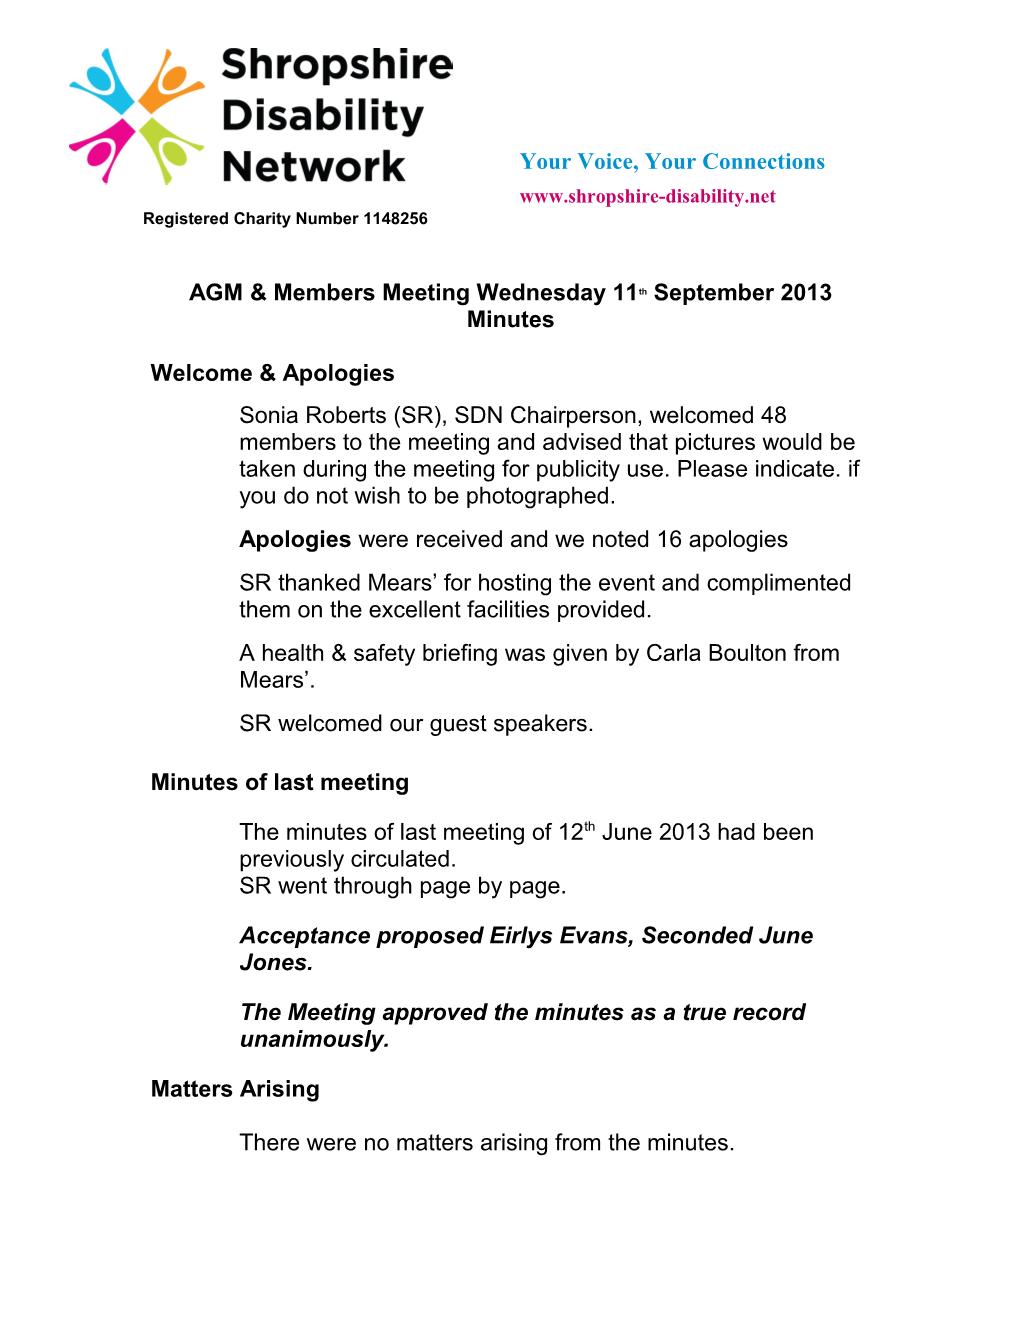 AGM & Members Meeting Wednesday 11Th September 2013